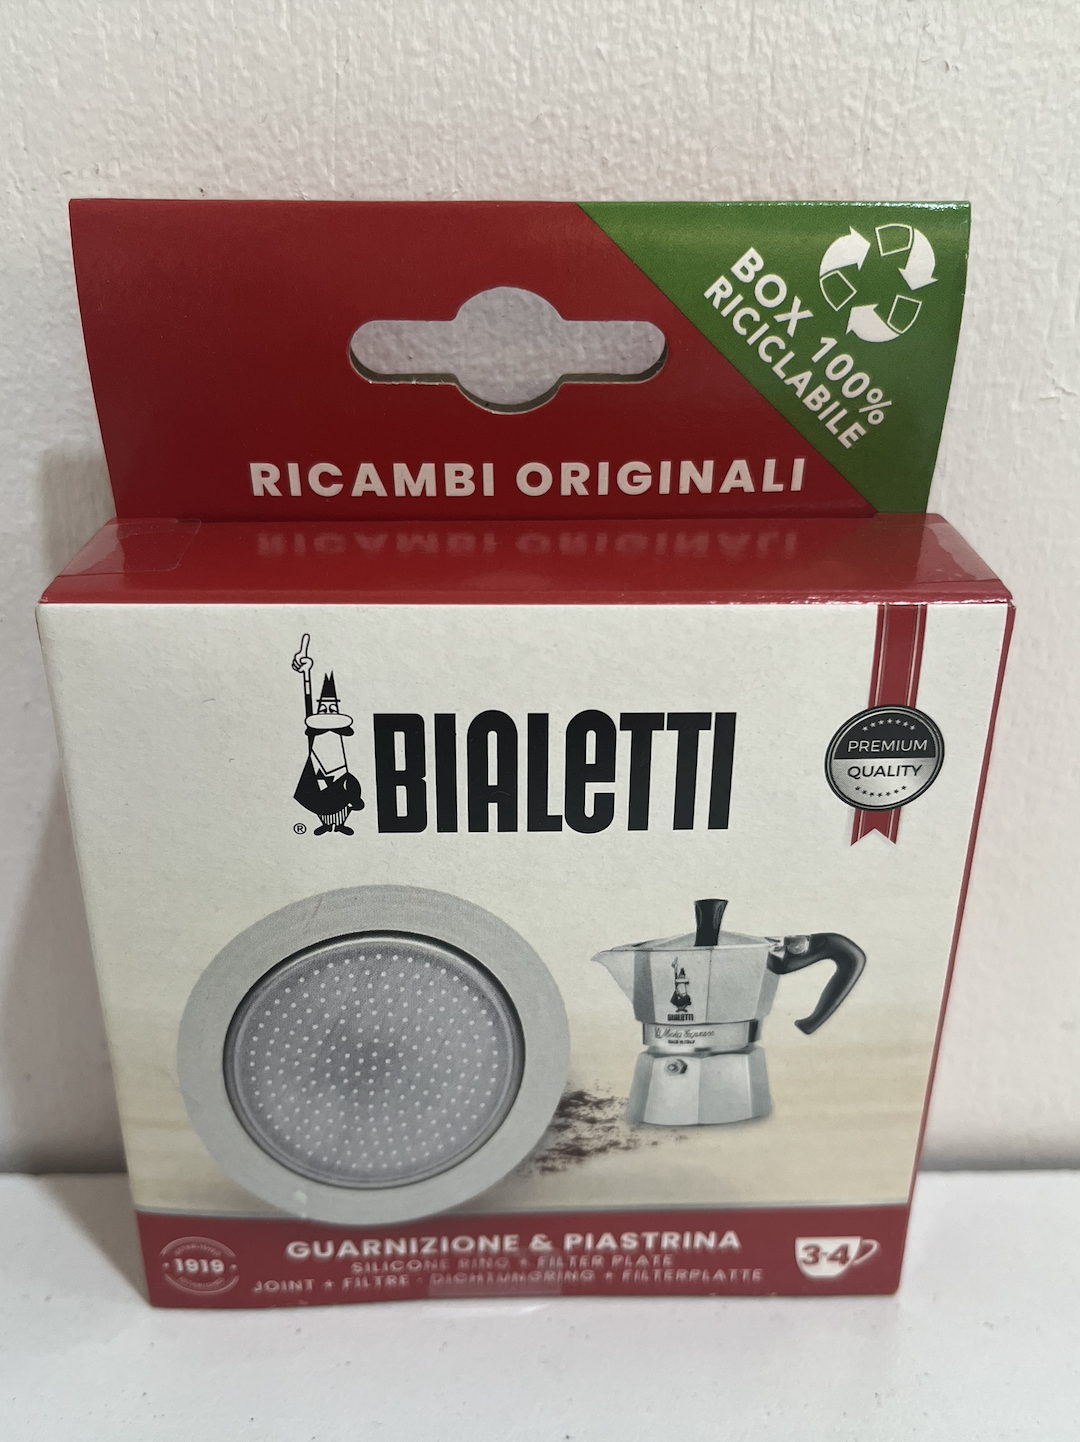 Bialetti Guarnizione & Piastrina (Gaskets and Plate) 6 Cups